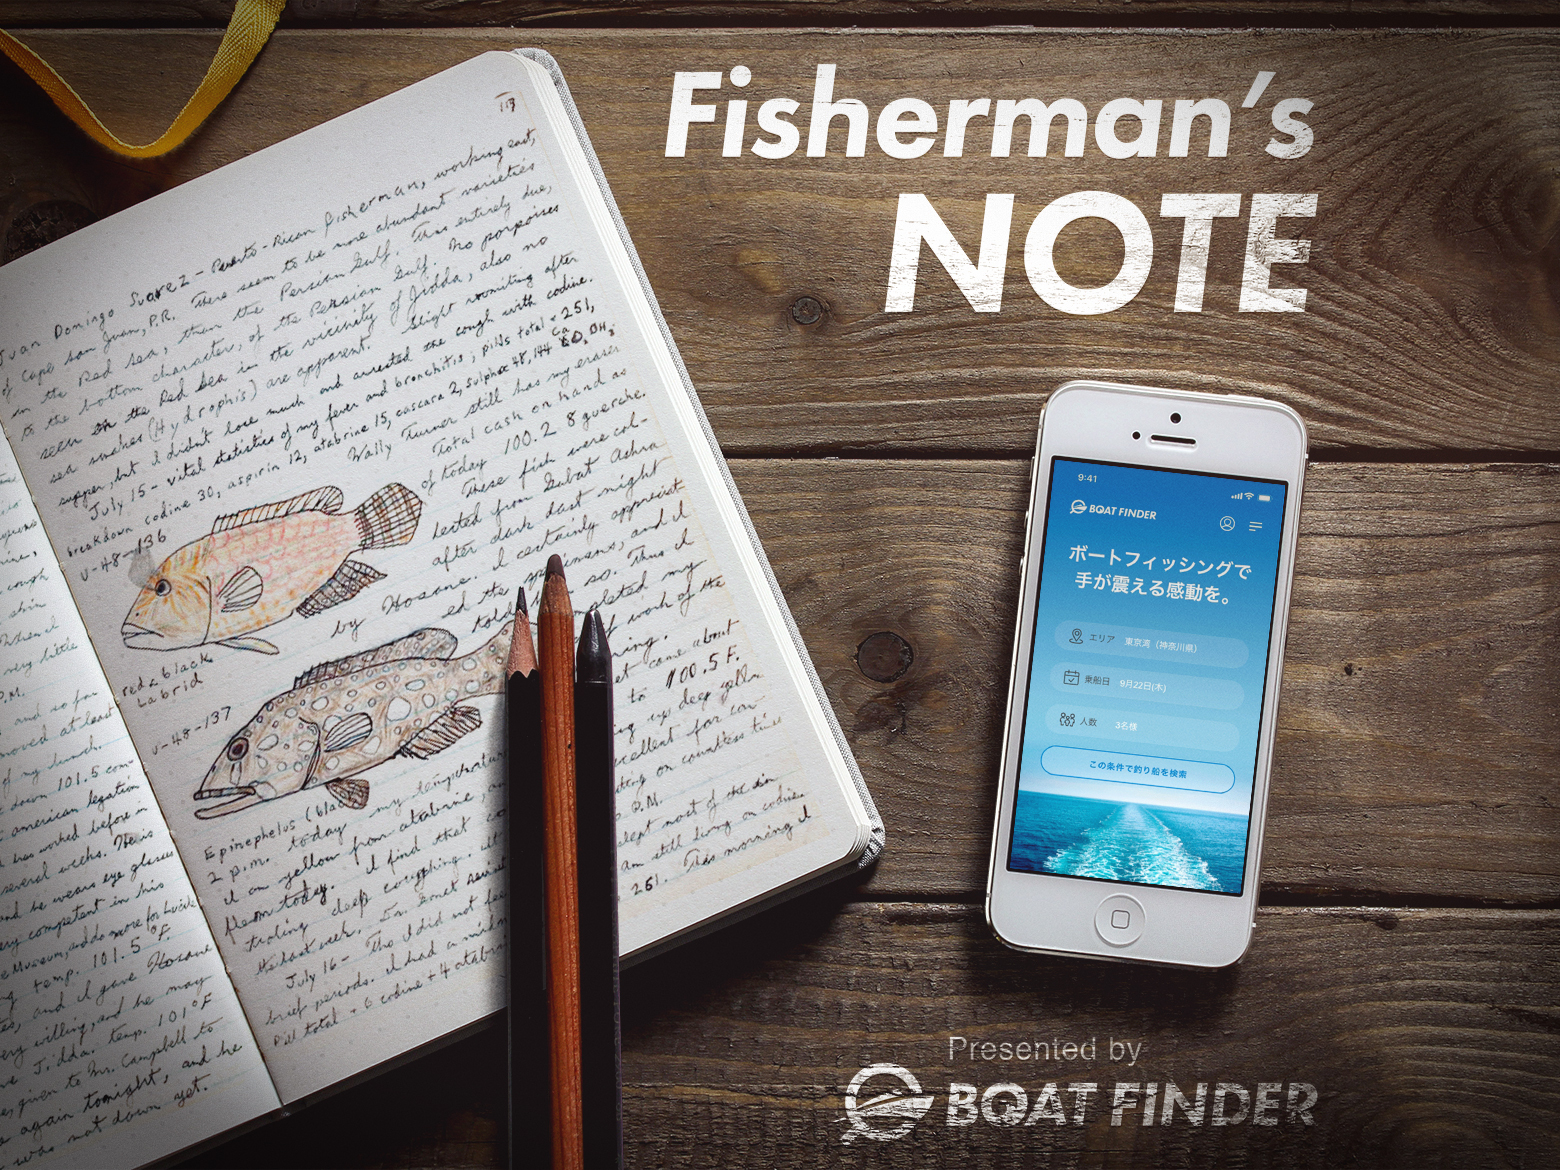 Fisherman’s NOTE